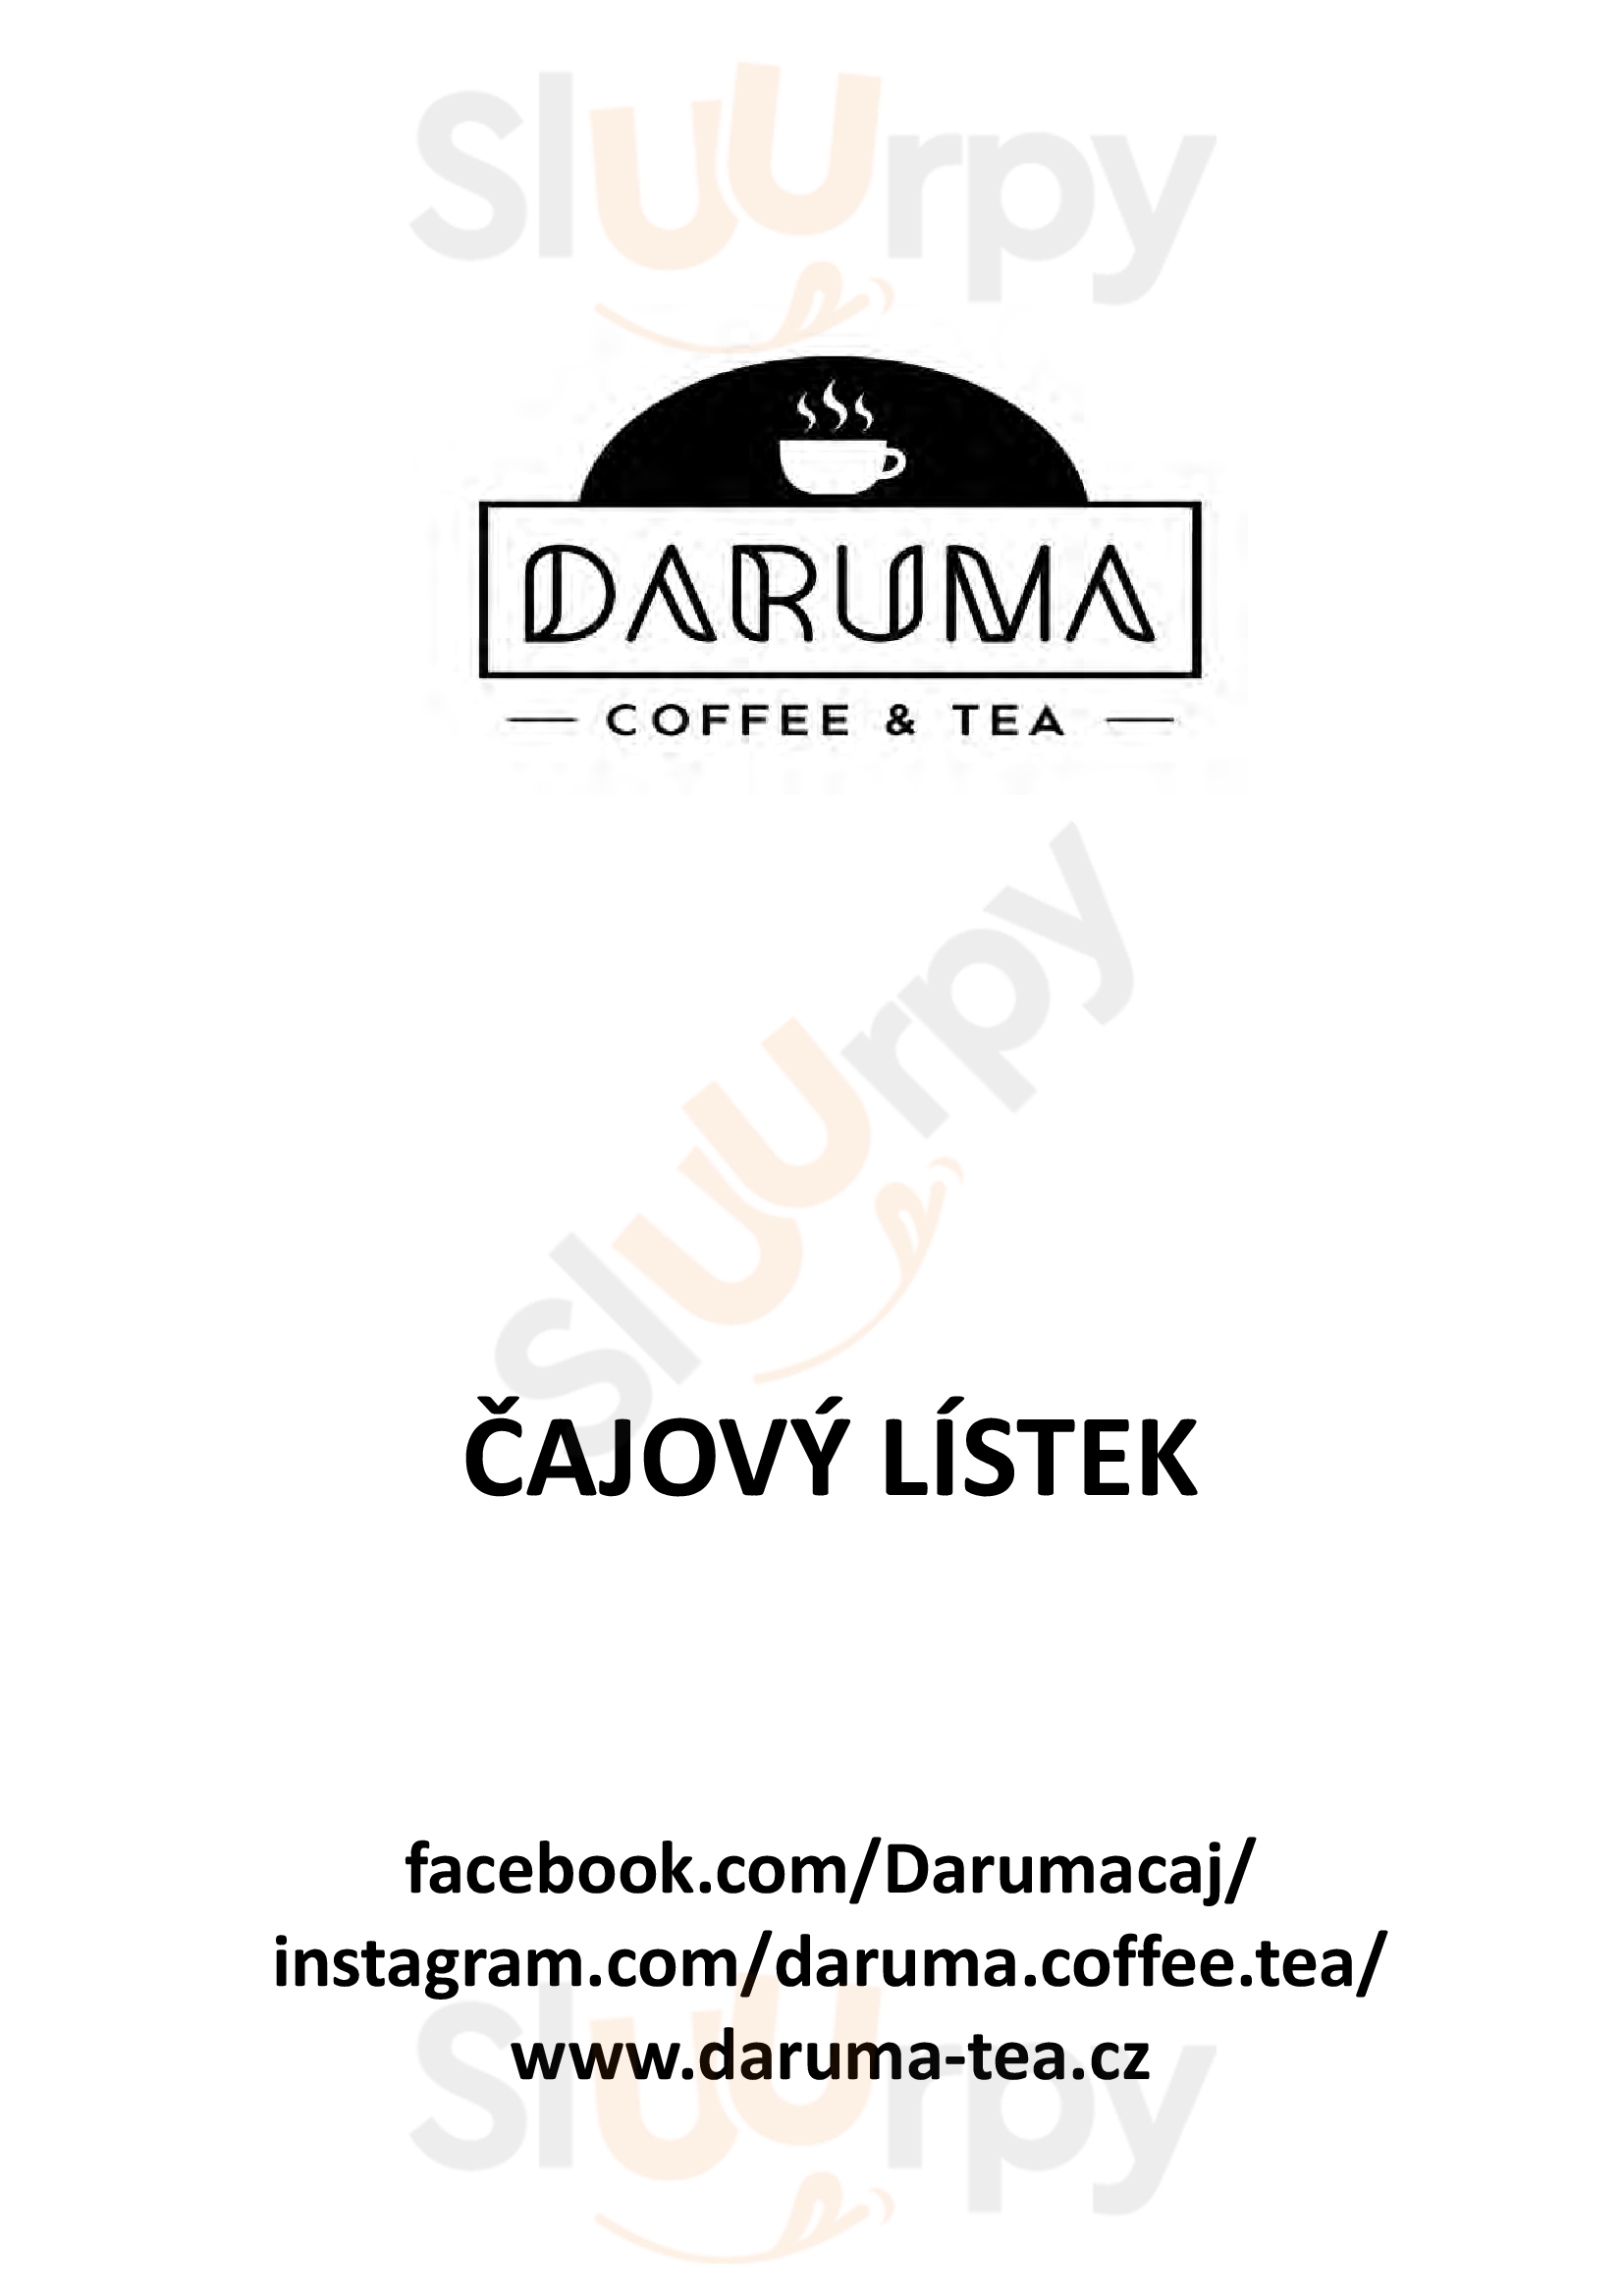 Daruma Coffee & Tea Praha Menu - 1